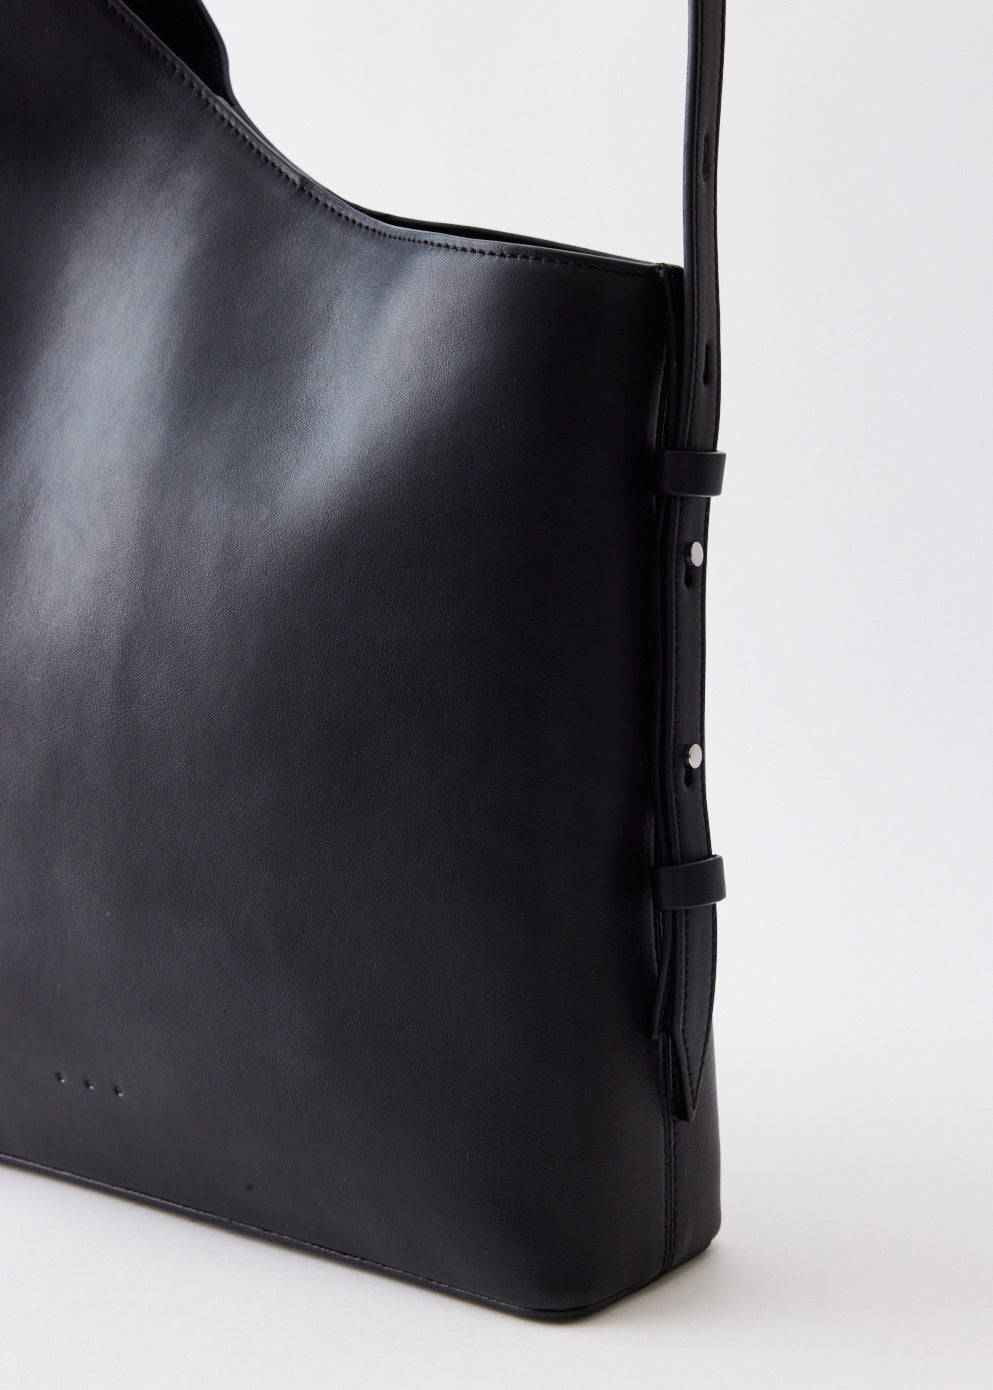 The Demi Lune shopper aka the perfect bag. Thank you @aesther_ekme. 🫶🏼